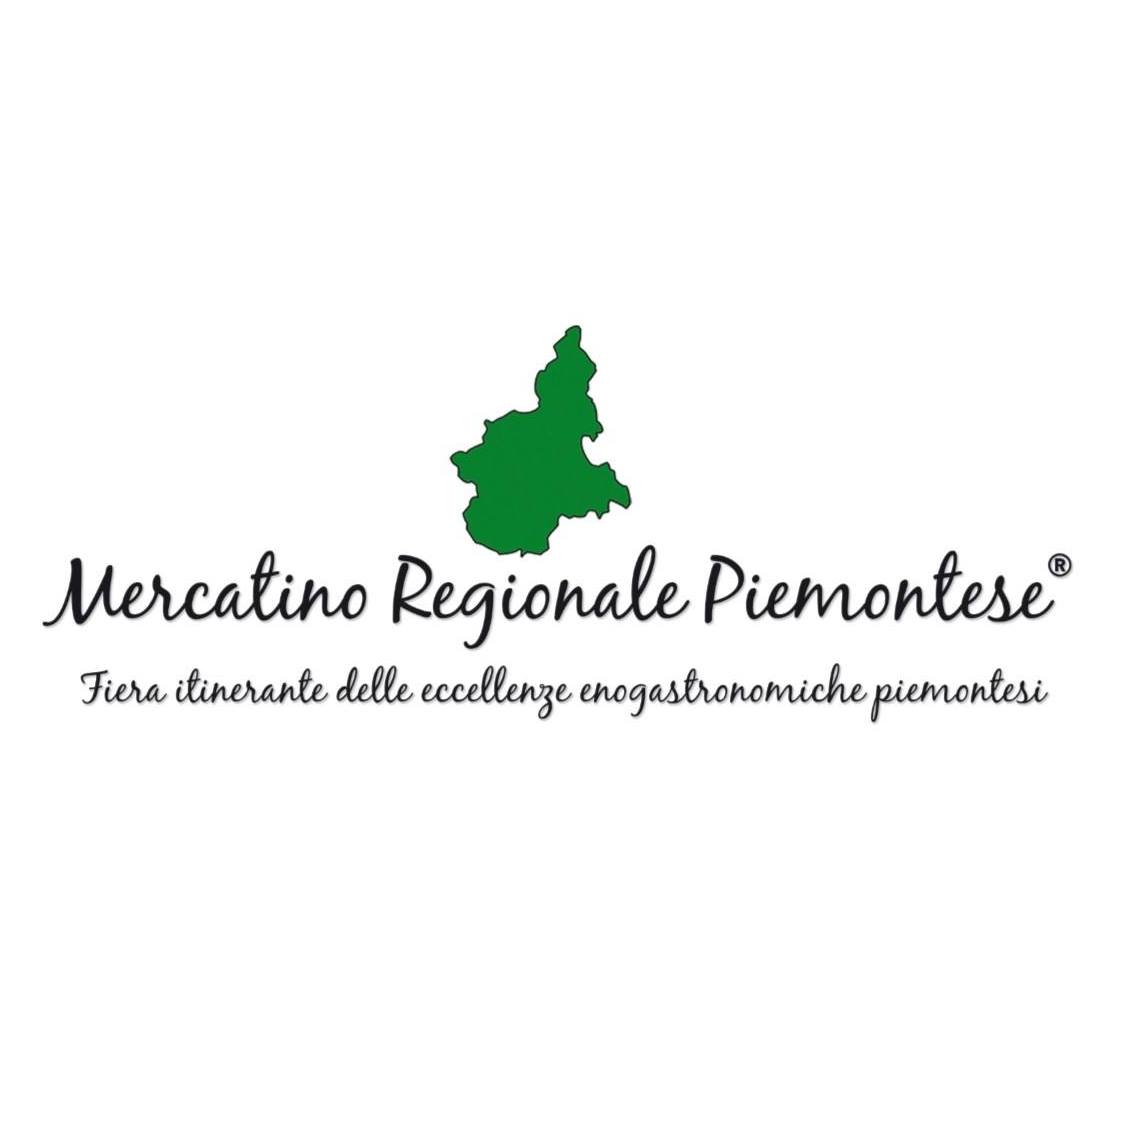 Mercatino Regionale Piemontese